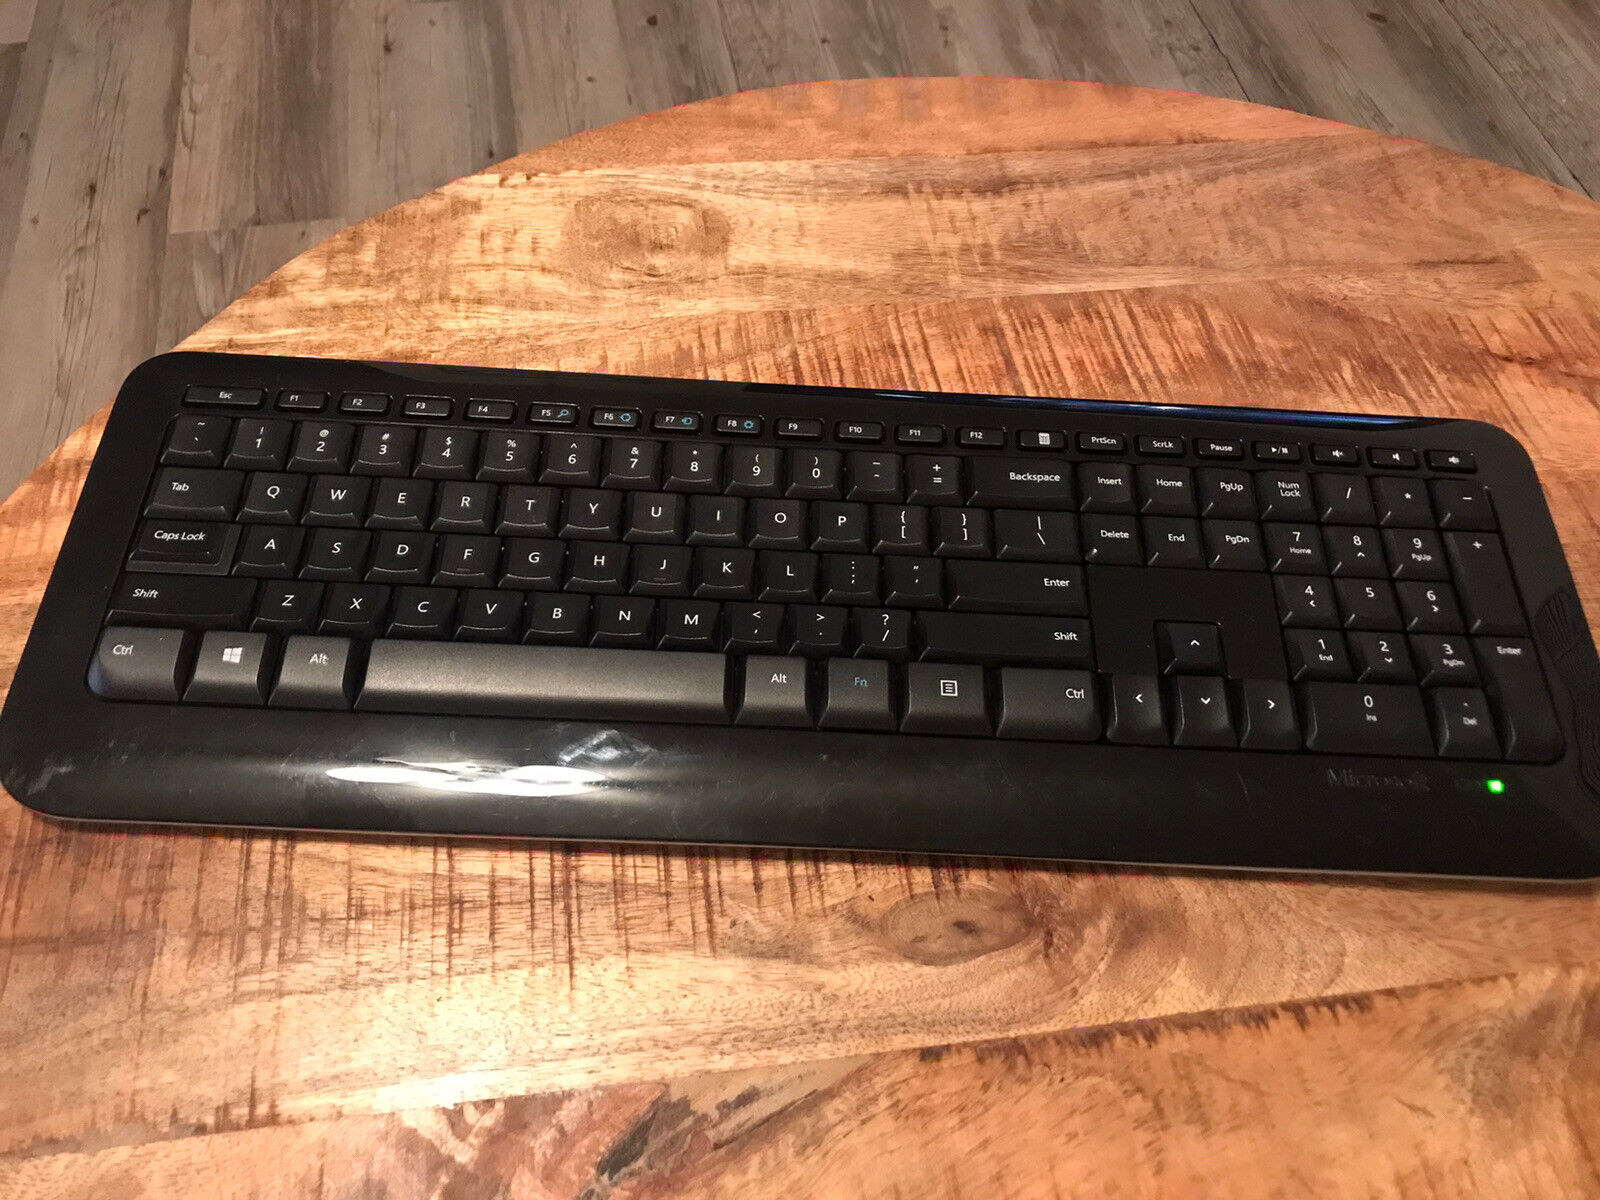 Microsoft Wireless 850 Keyboard